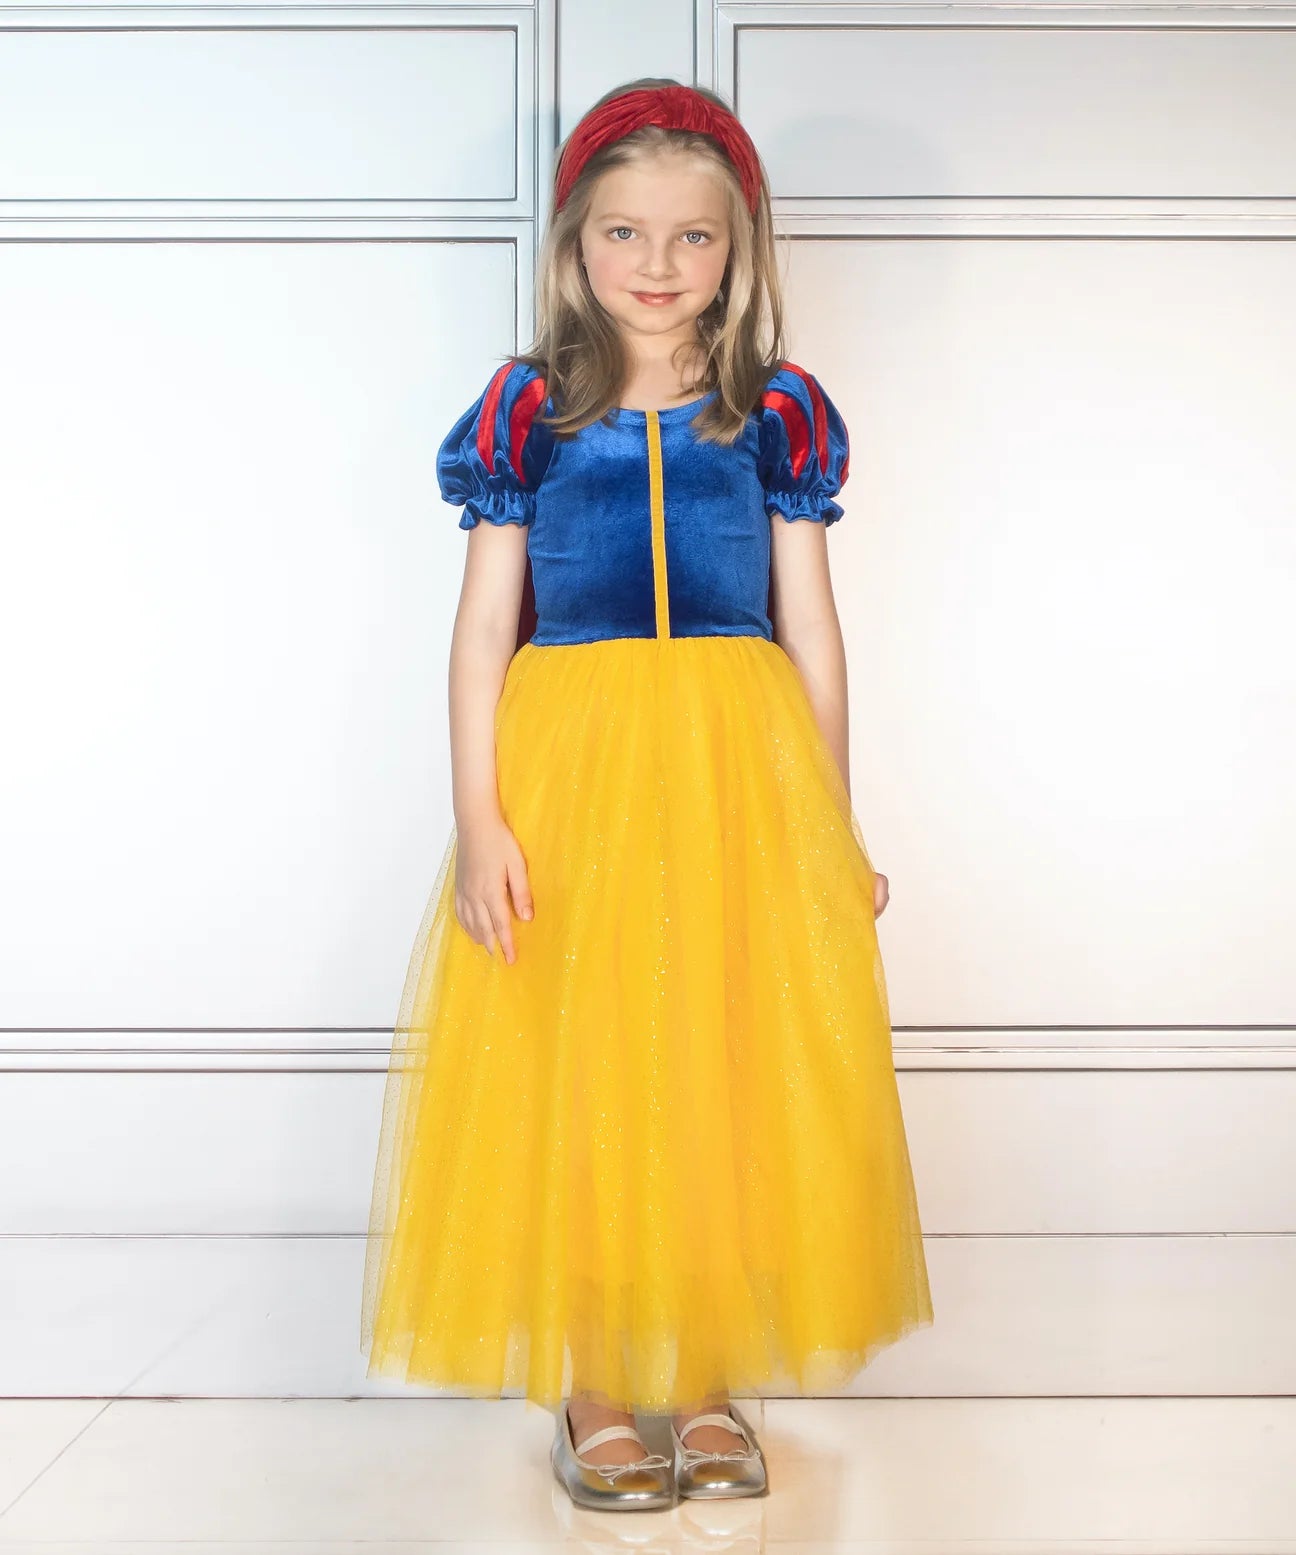 Joy by Teresita Orillac: Fairest Princess Costume Dress